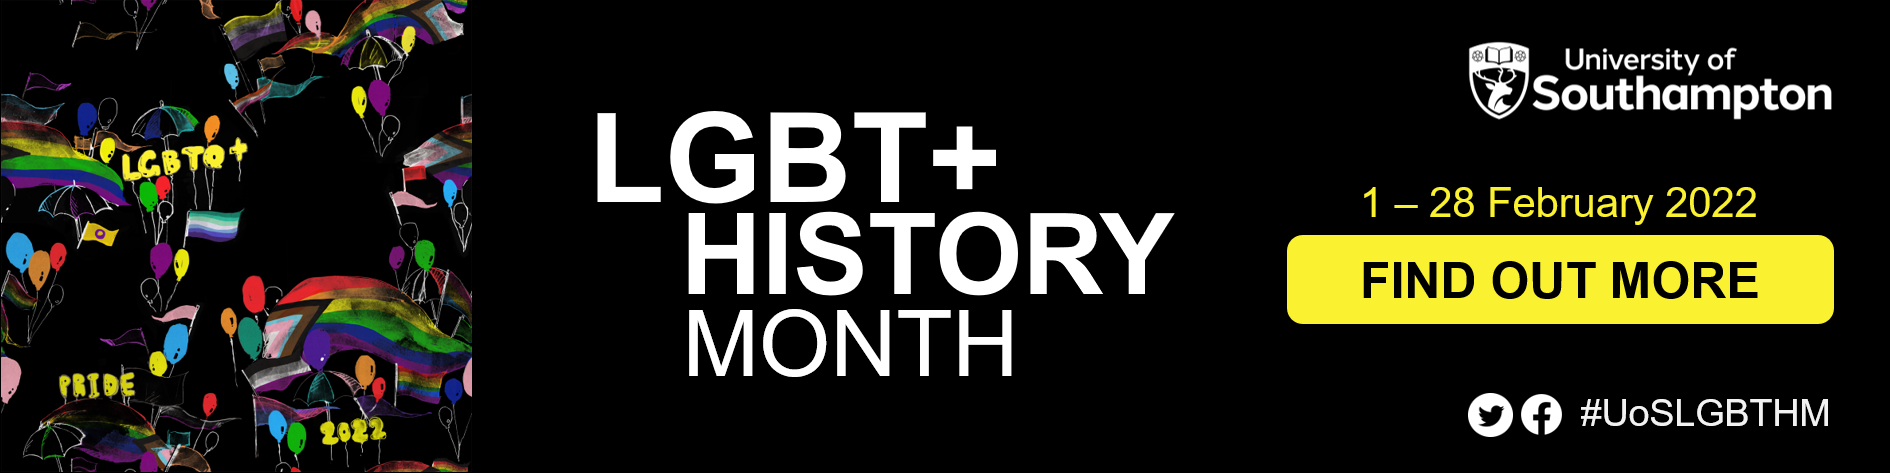 LGBTHM CTA web banner 300x100.png